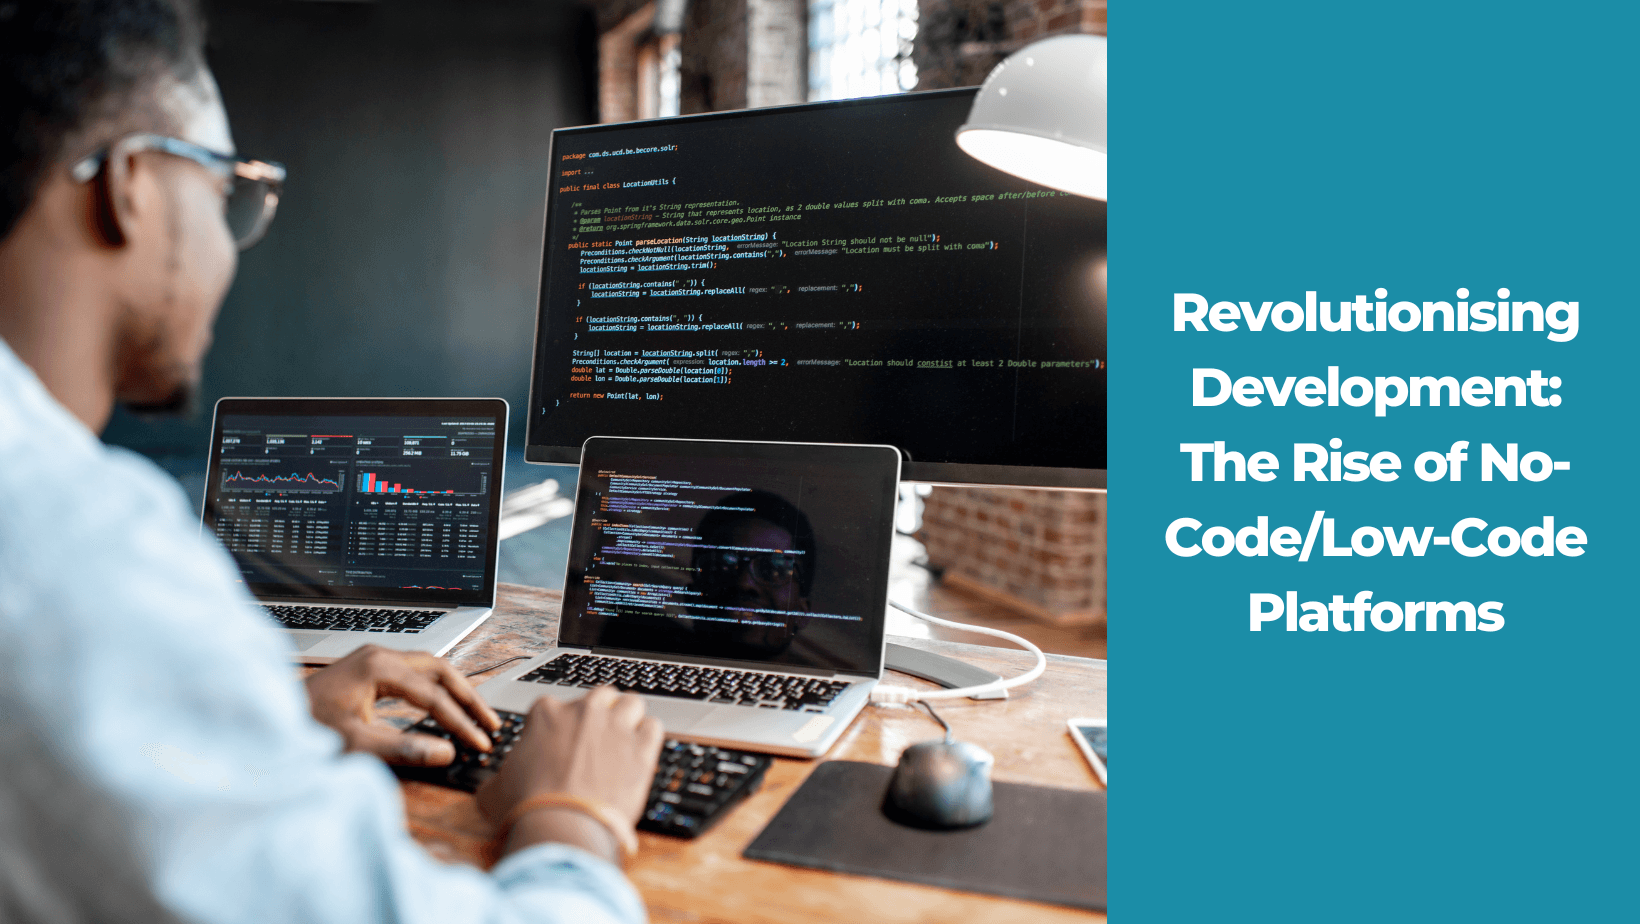 Revolutionising Development: The Rise of No-Code/Low-Code Platforms